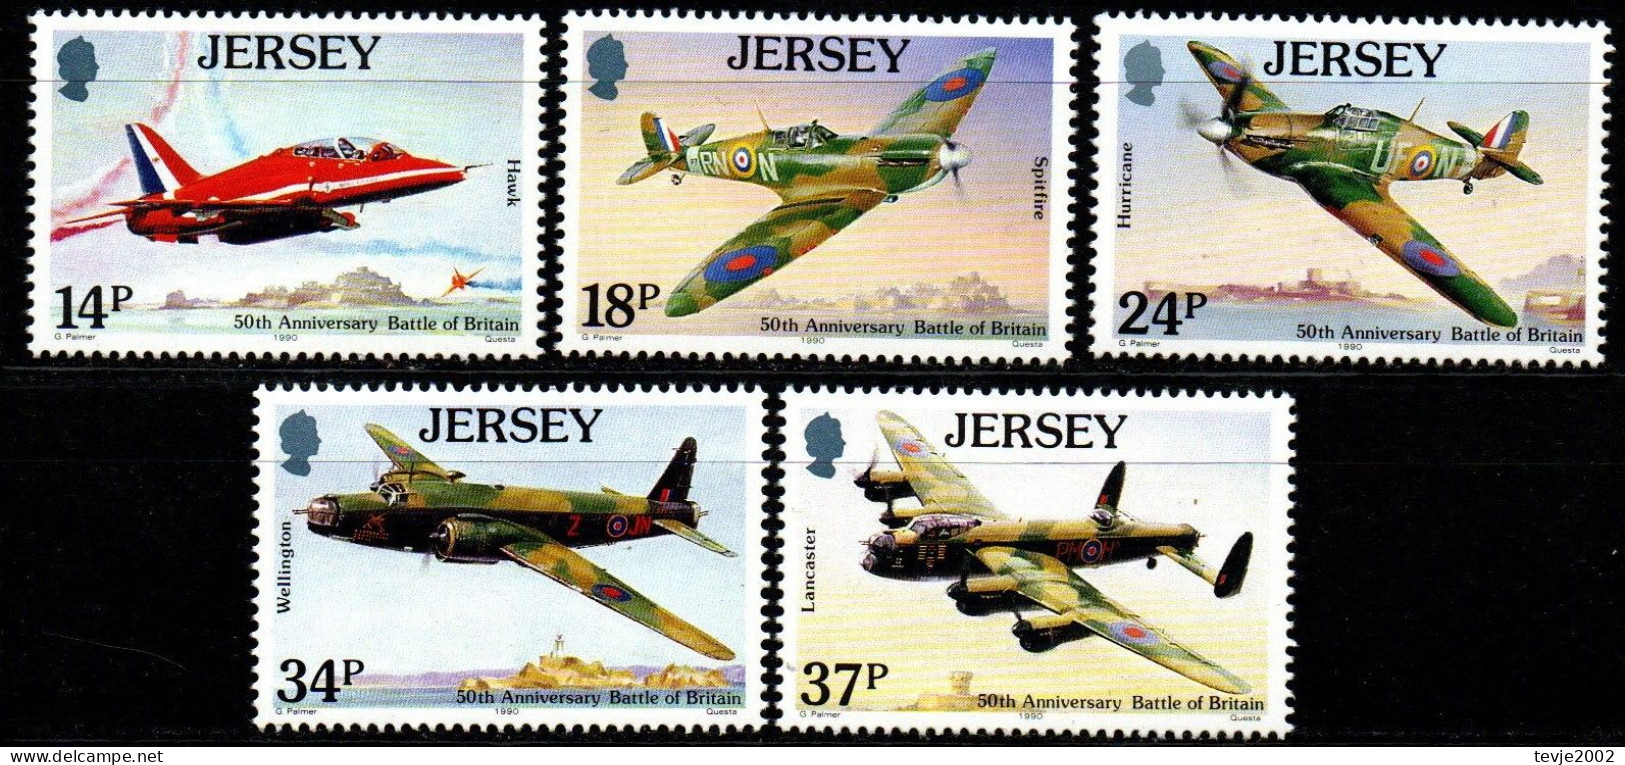 Jersey 1990 - Mi.Nr. 524 - 528 - Postfrisch MNH - Flugzeuge Airplanes Military Militaria - Airplanes